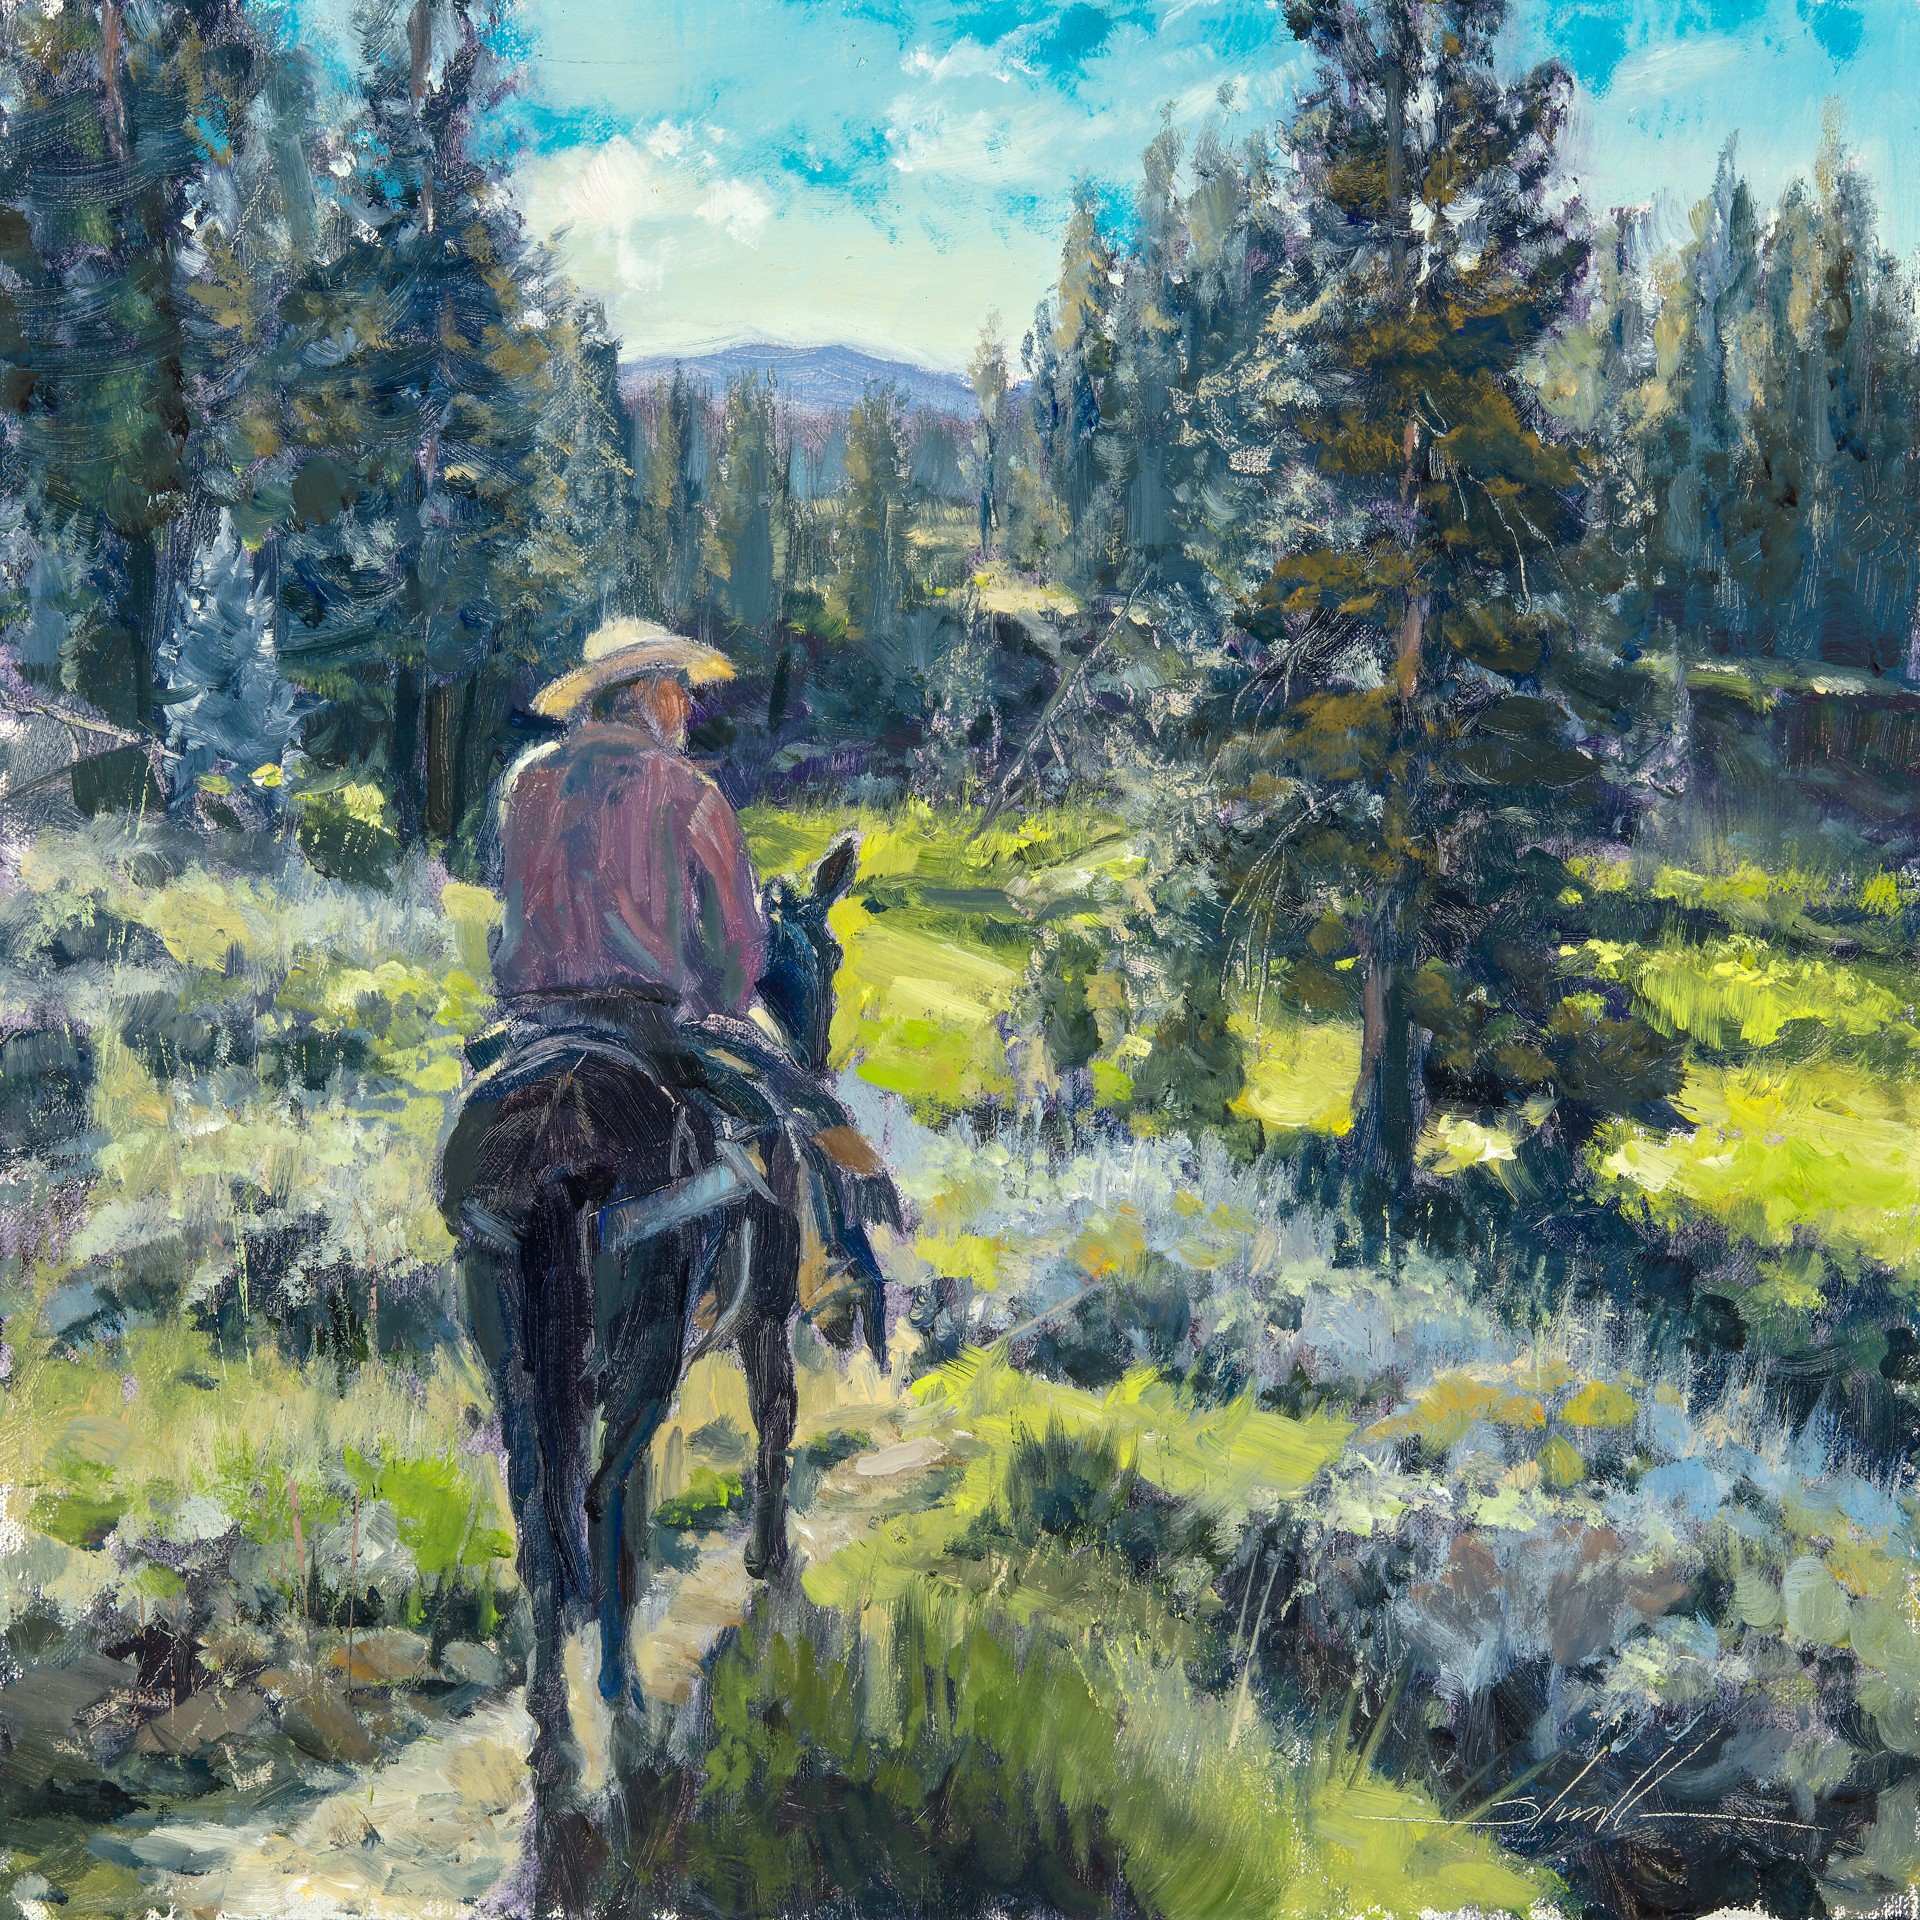 Ridin' the Bighorn Trail by Stephen Stauffer